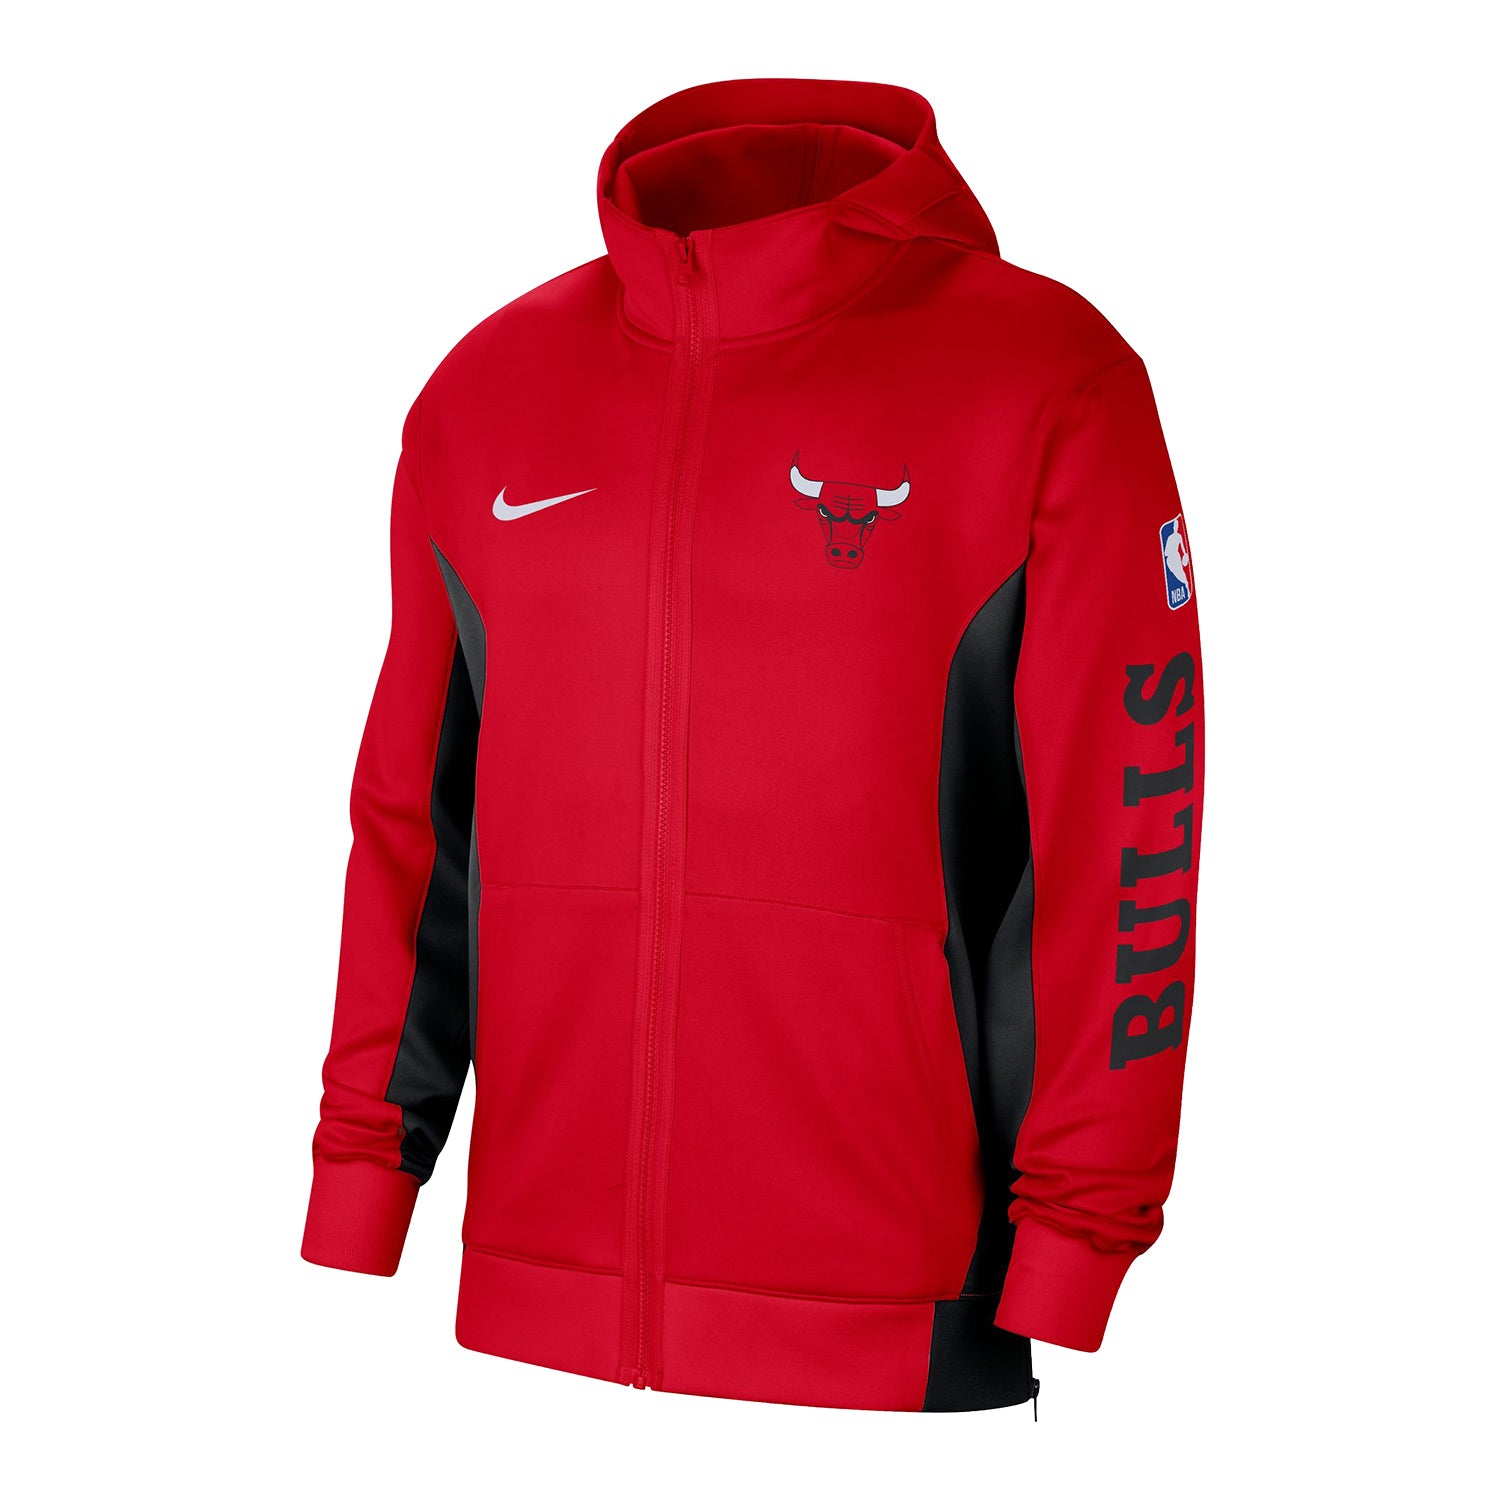 Nike NBA Shop. Team Jerseys, Apparel & Gear. Nike LU